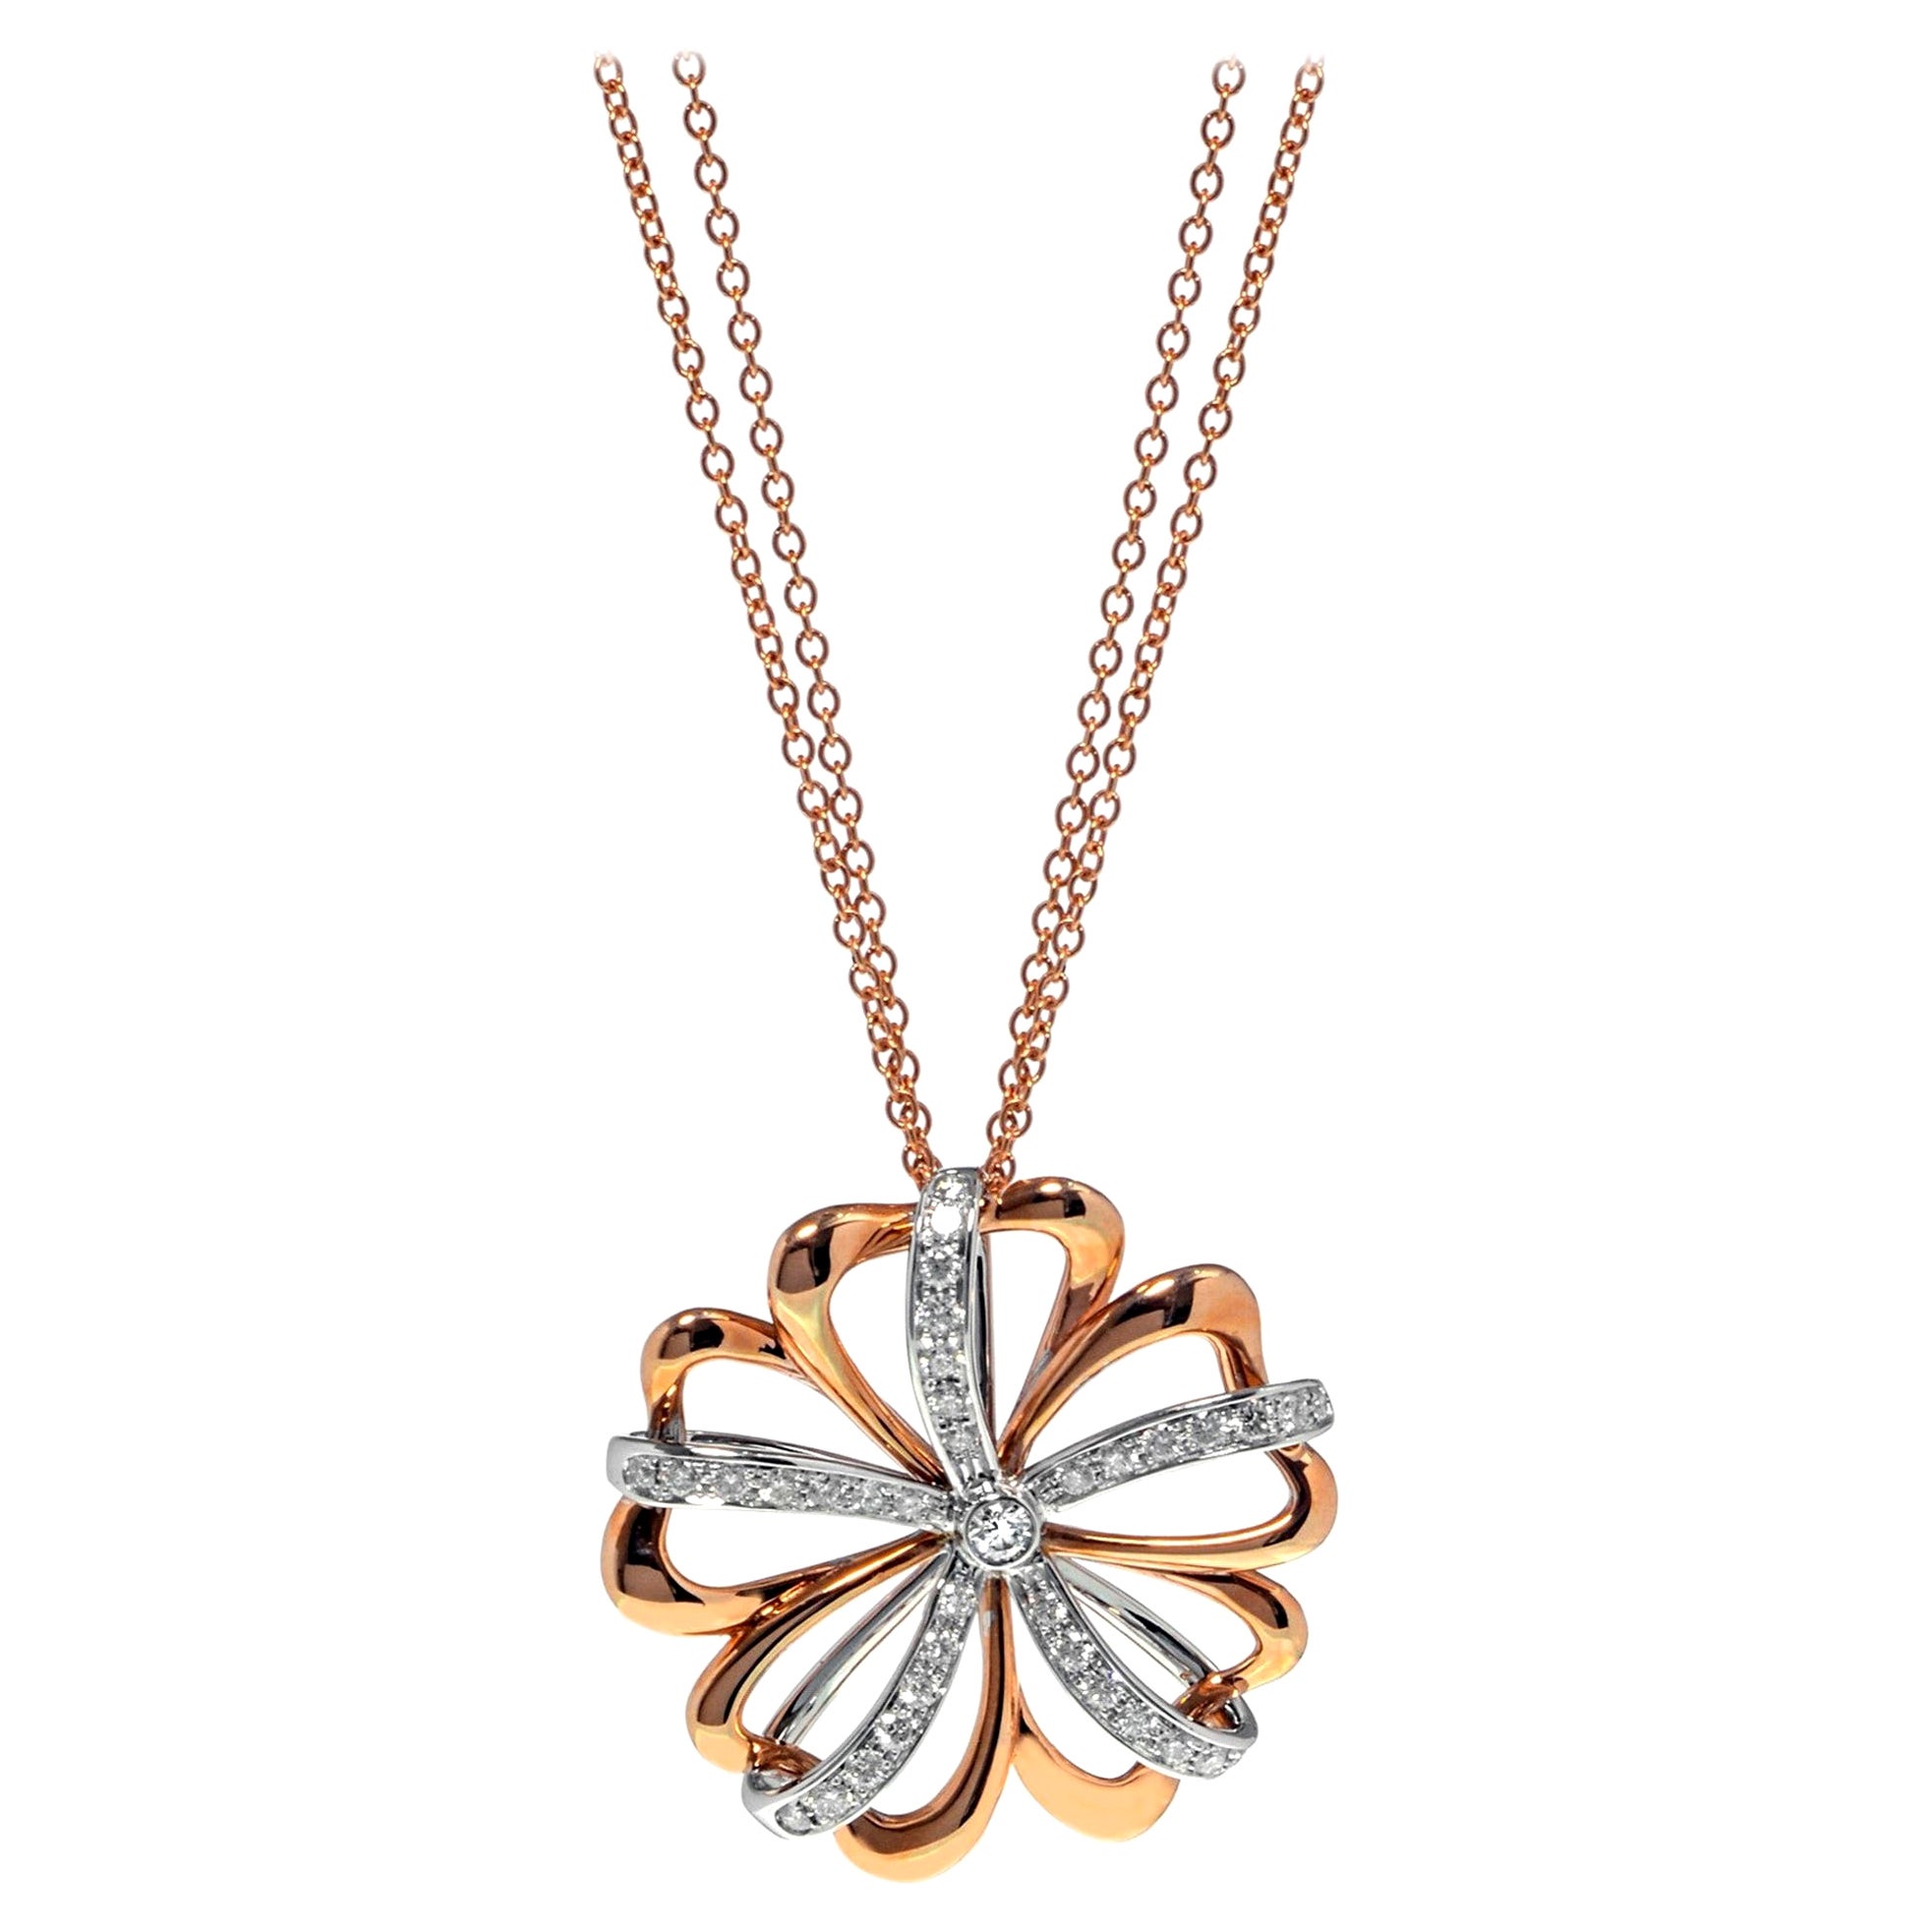 Luca Carati Diamond Flower Pendant Long Necklace 18K Rose & White Gold 0.87Cttw 